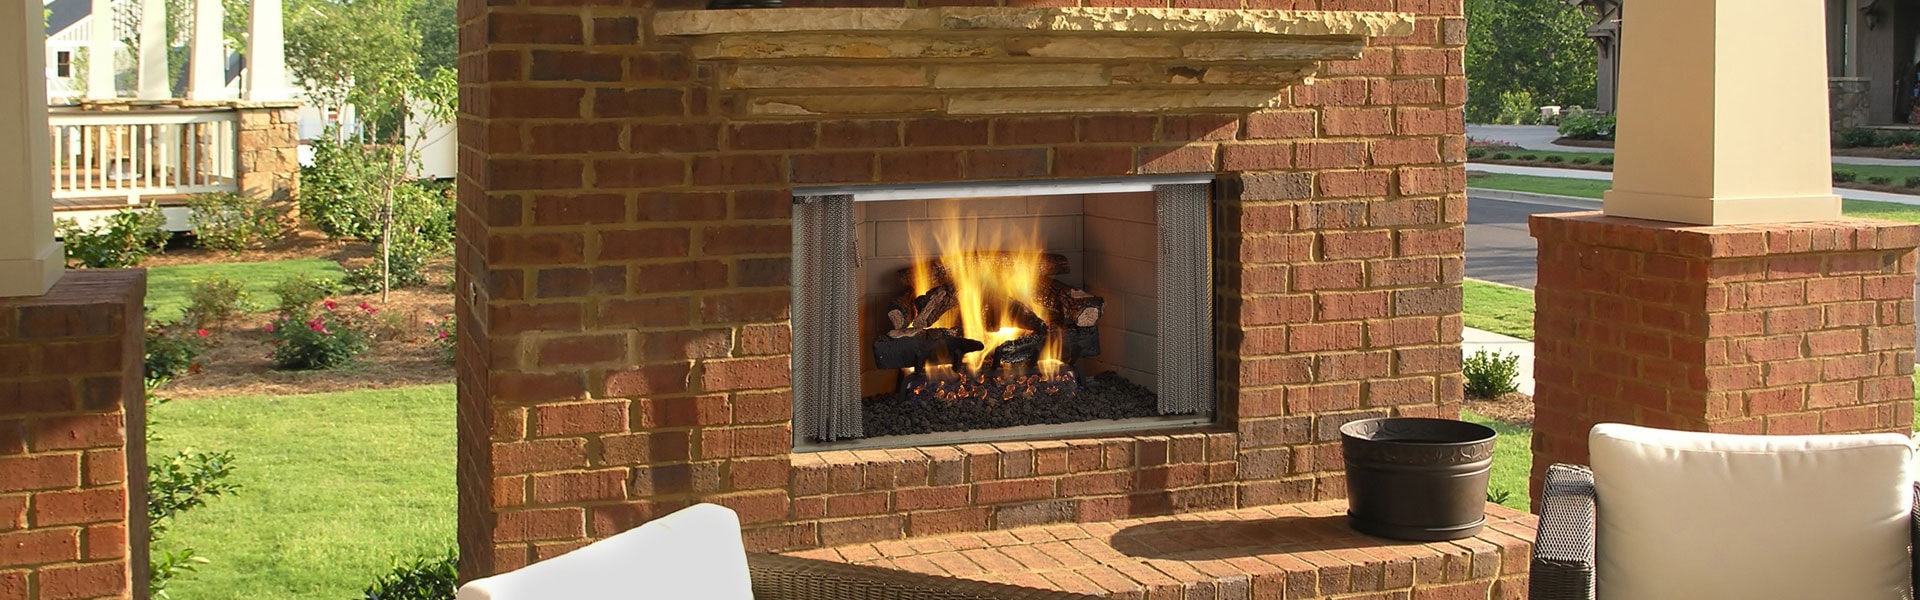 Fireplace Mesh Screen Curtain Luxury Villawood Wood Fireplace